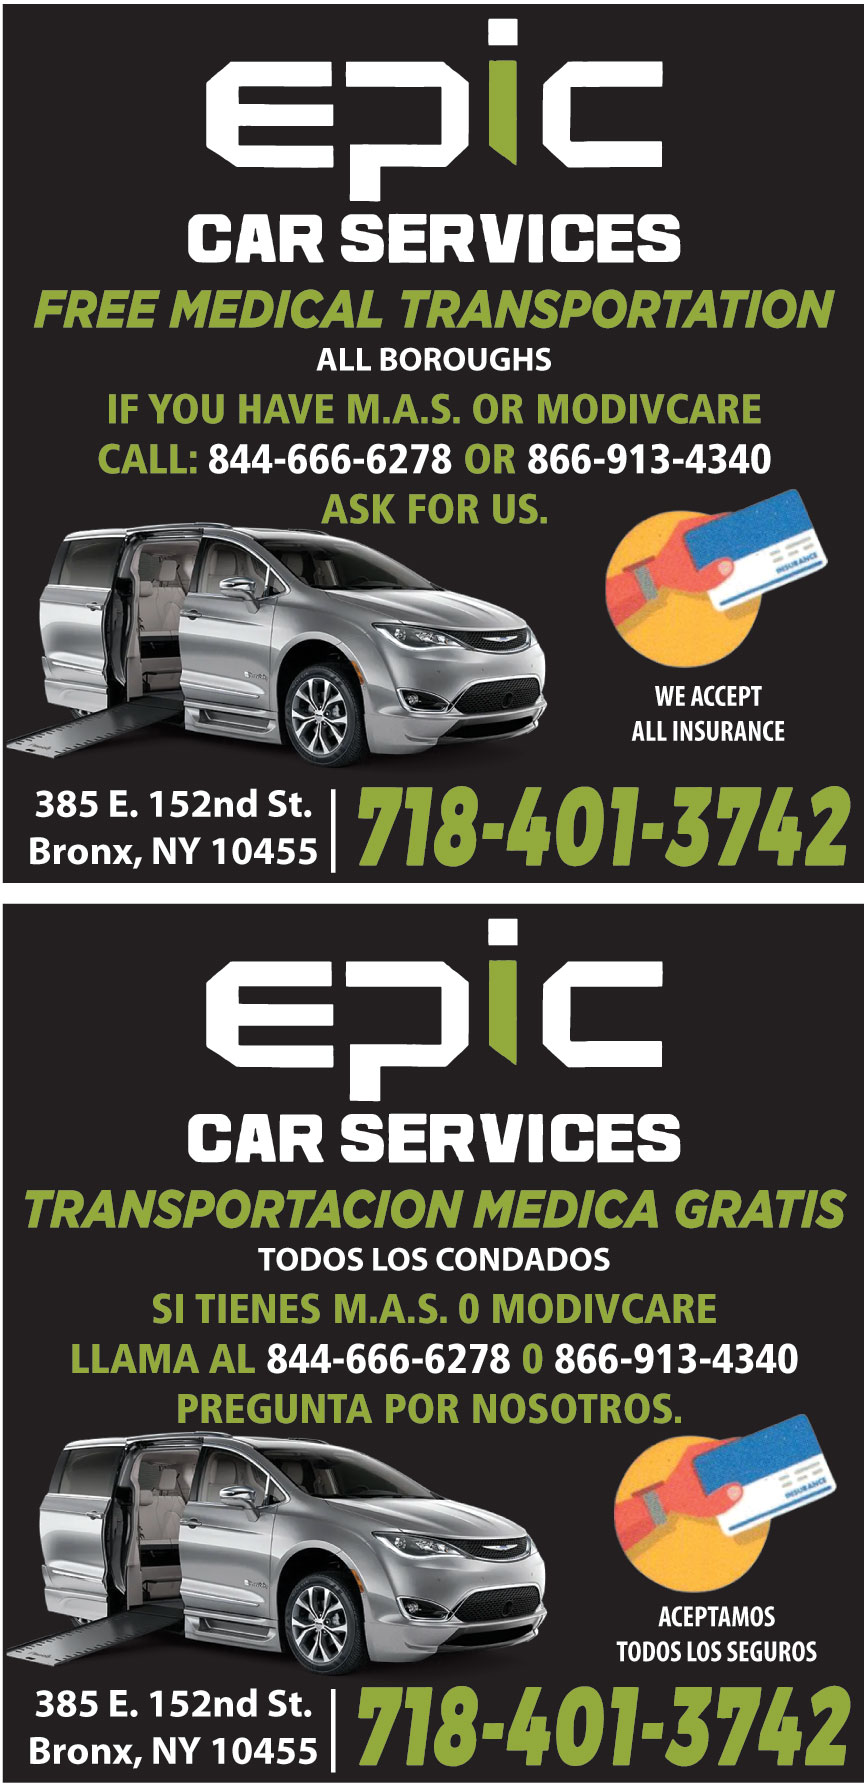 EPIC CAR SERVICE